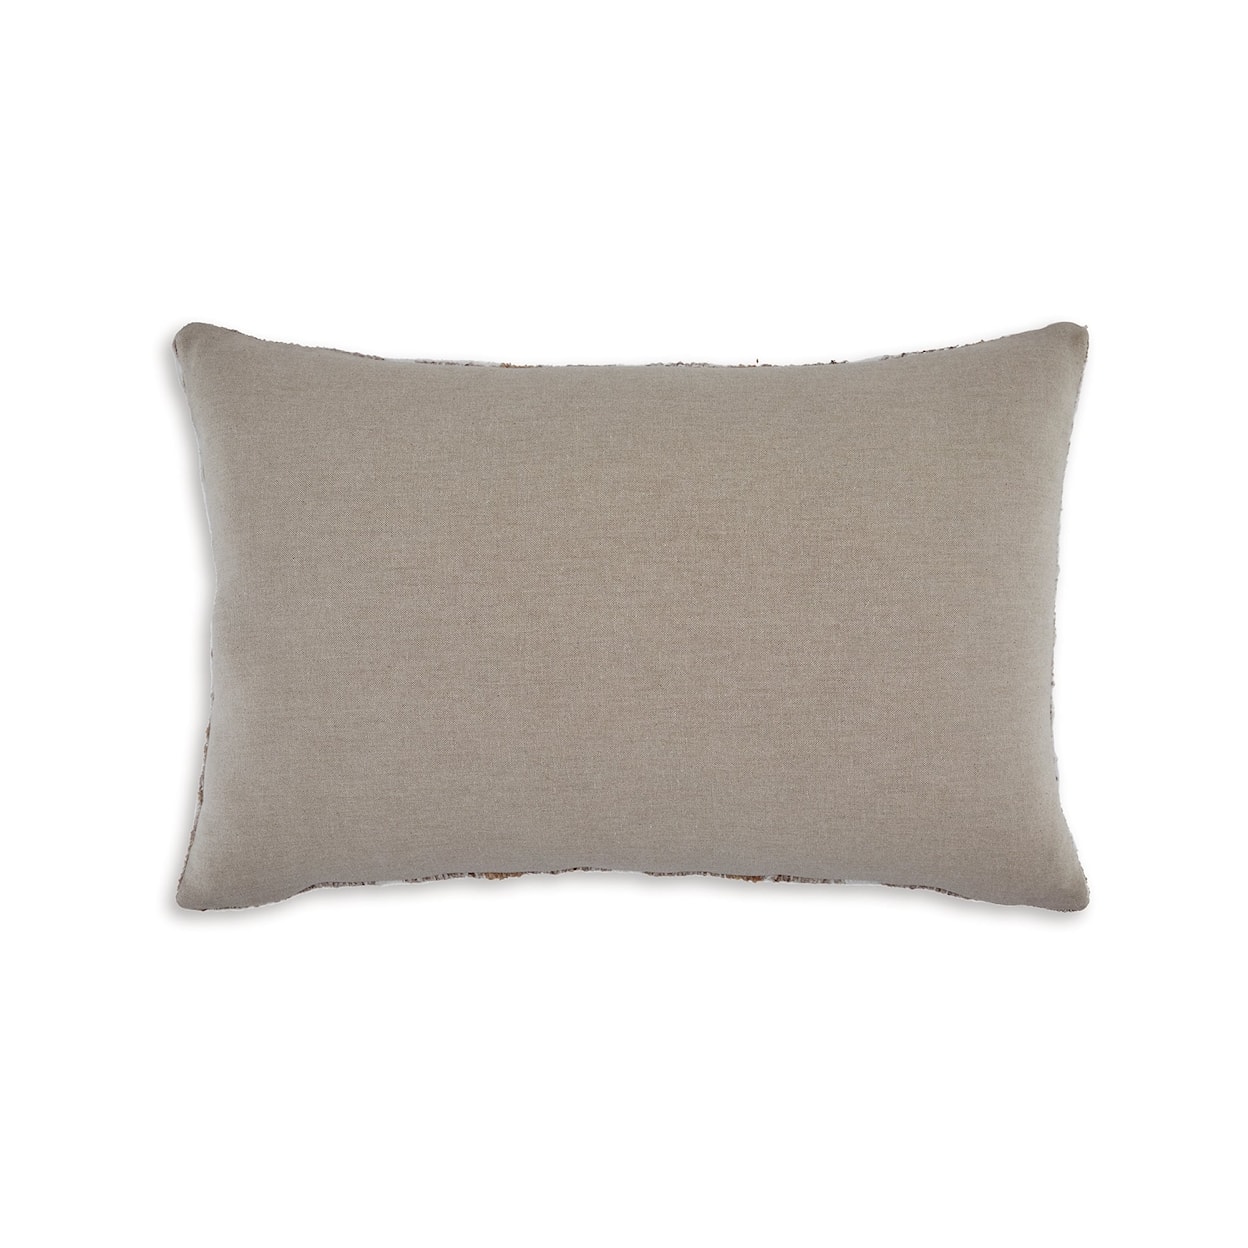 Ashley Furniture Signature Design Benish Pillow